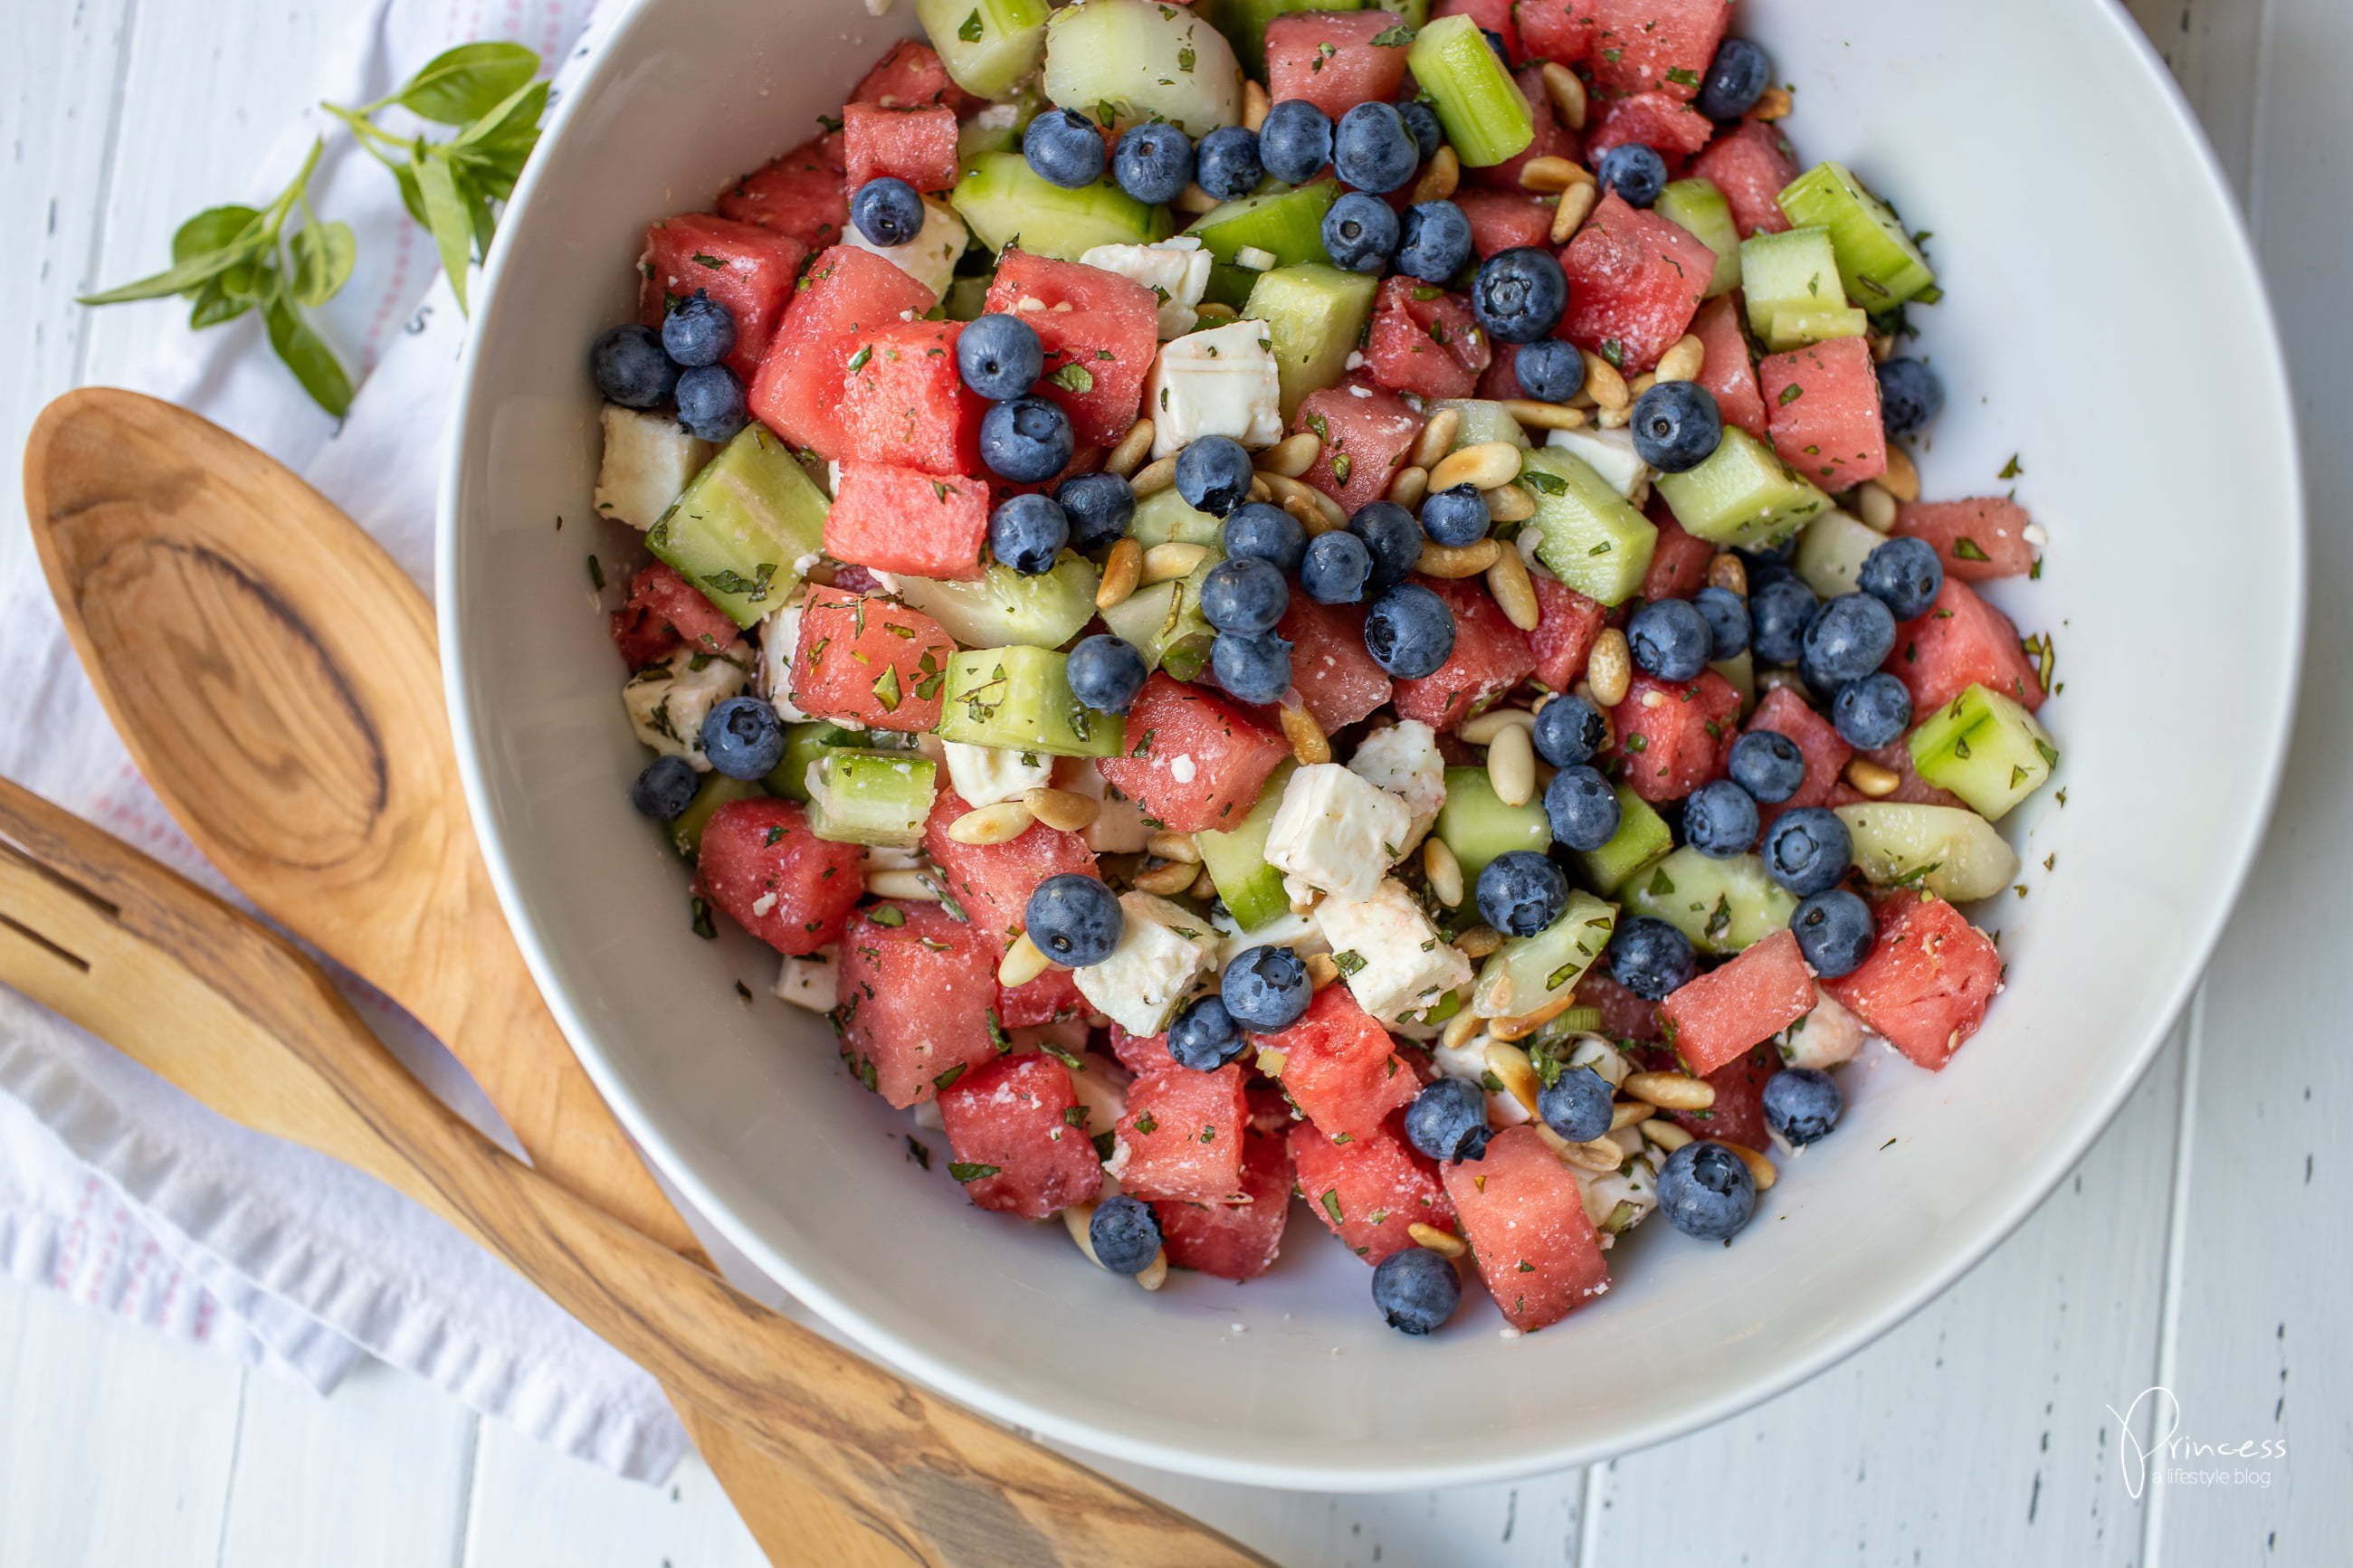 Wassermelonen Feta Salat mit Balubeeren | Foodblog Princess.ch